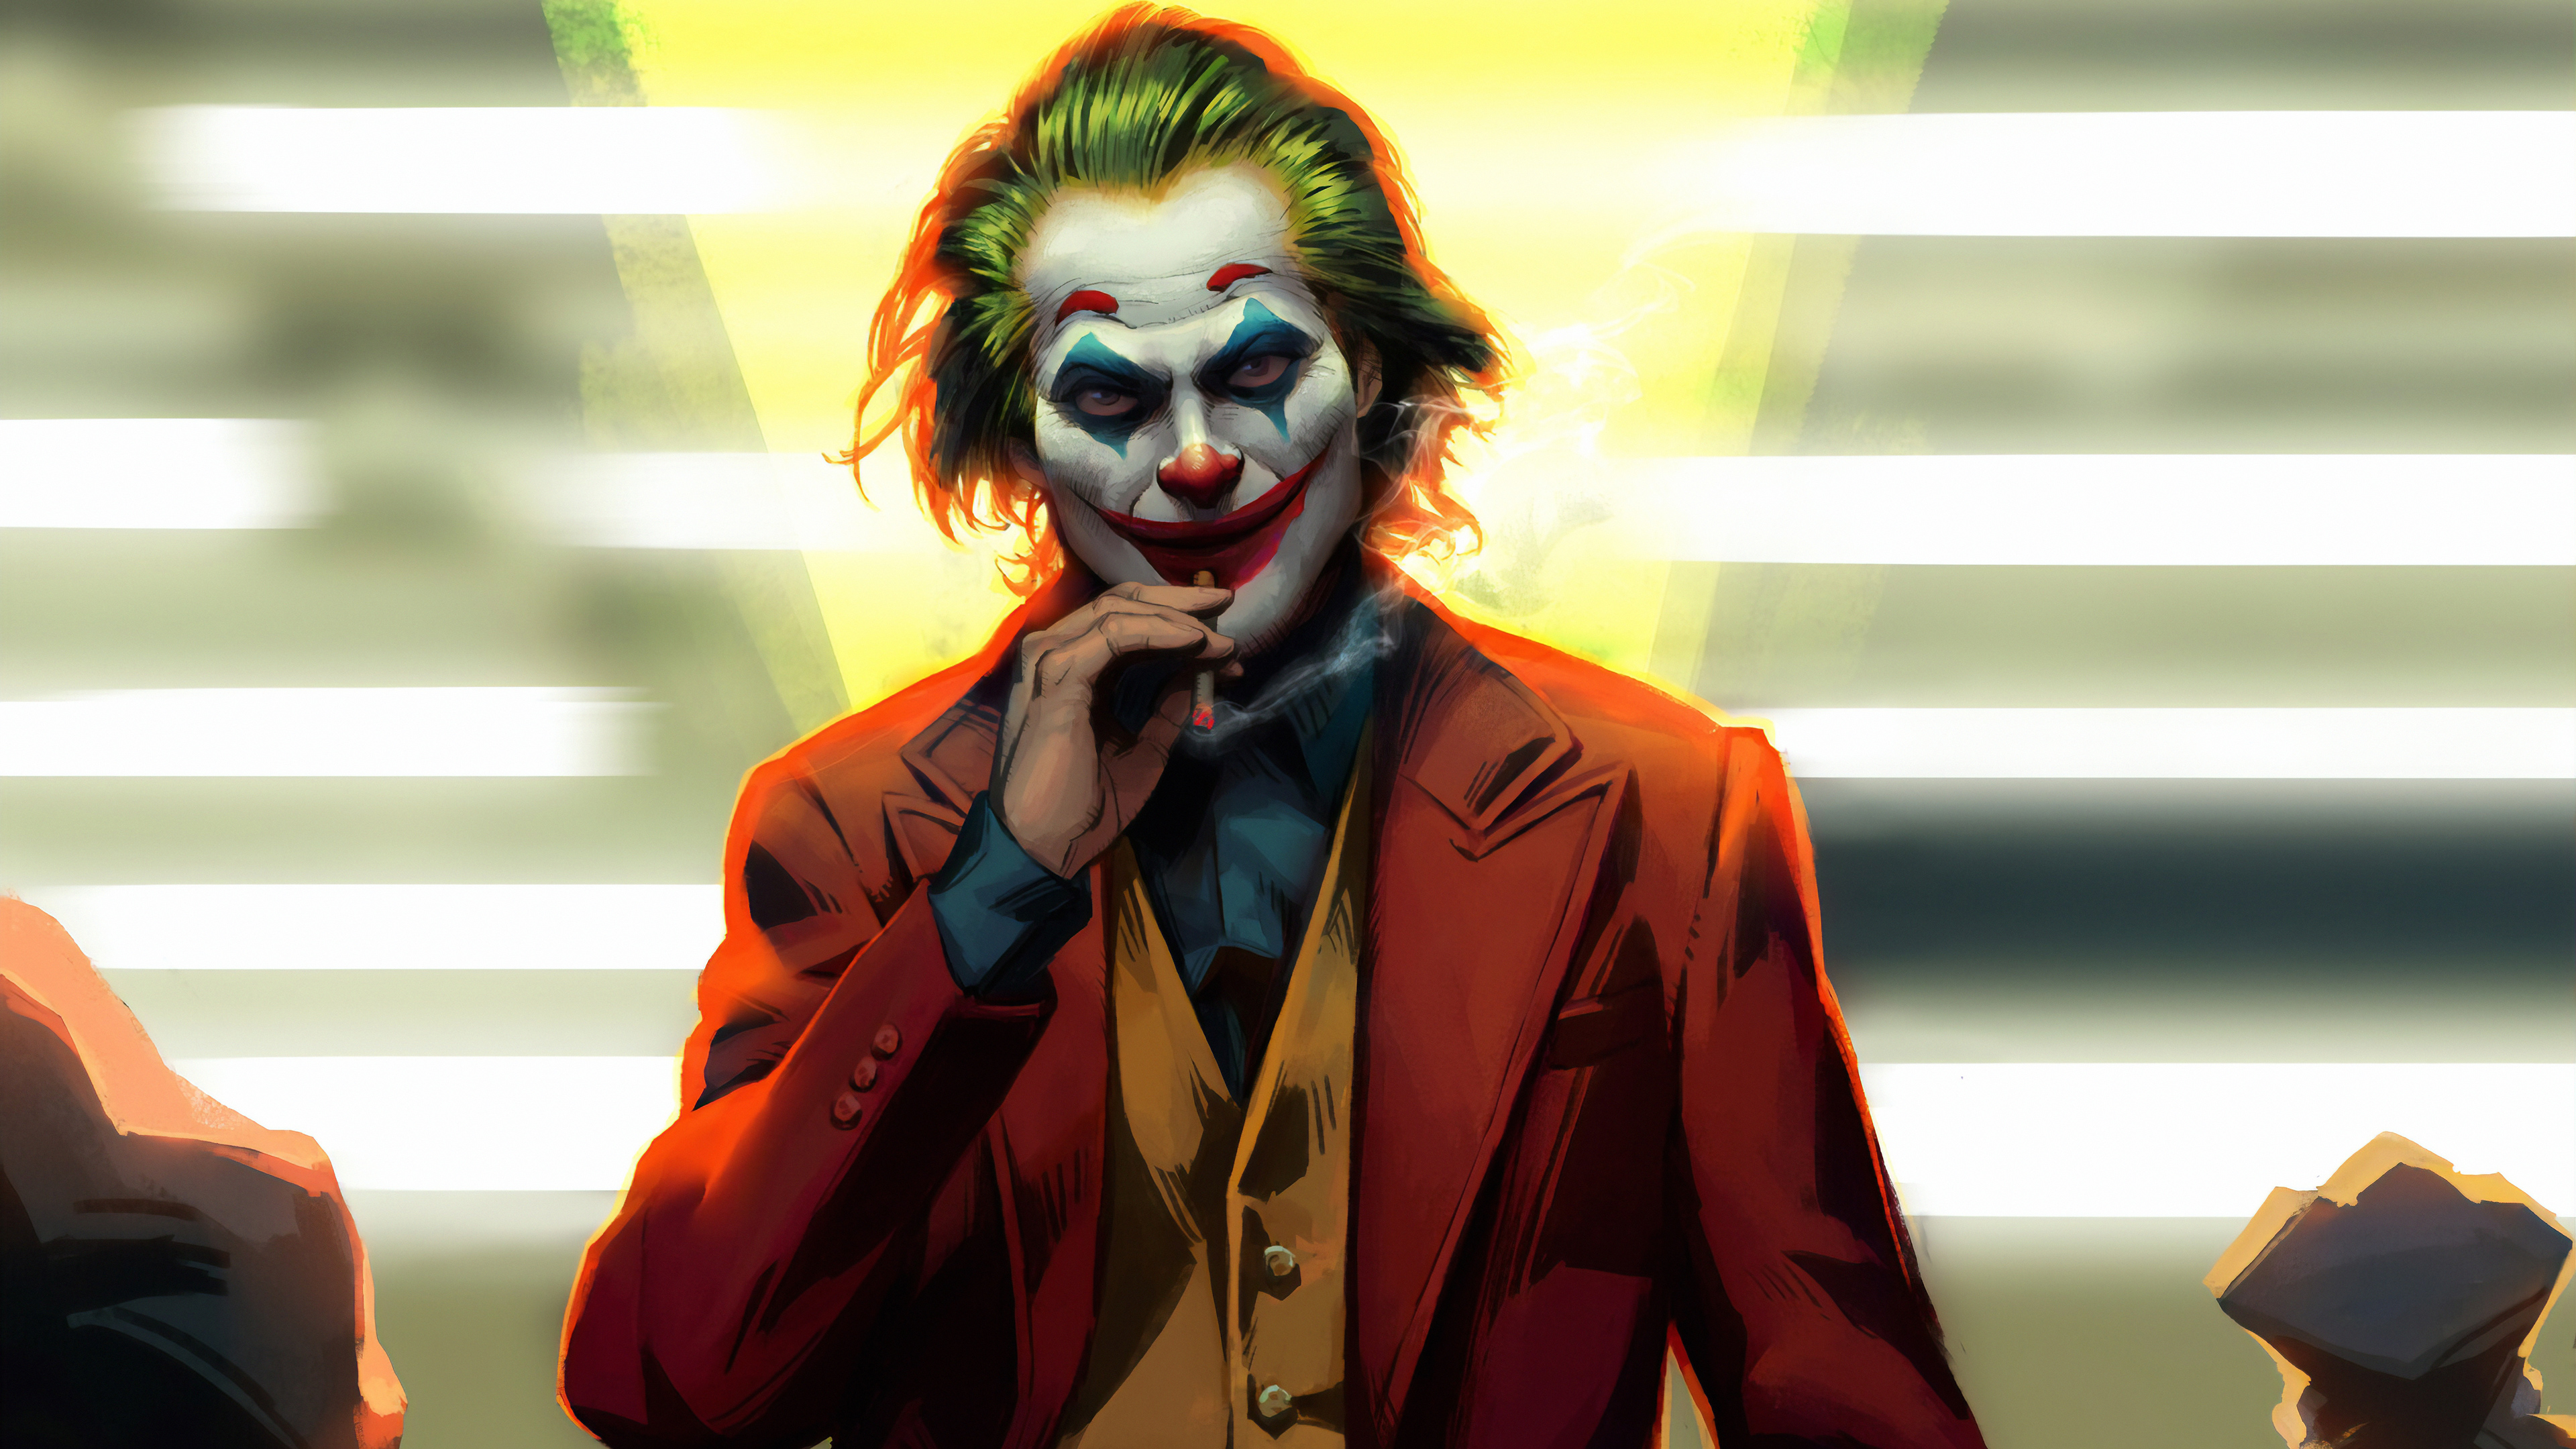 Joker Movie Smile, HD Superheroes, 4k Wallpapers, Images, Backgrounds ...